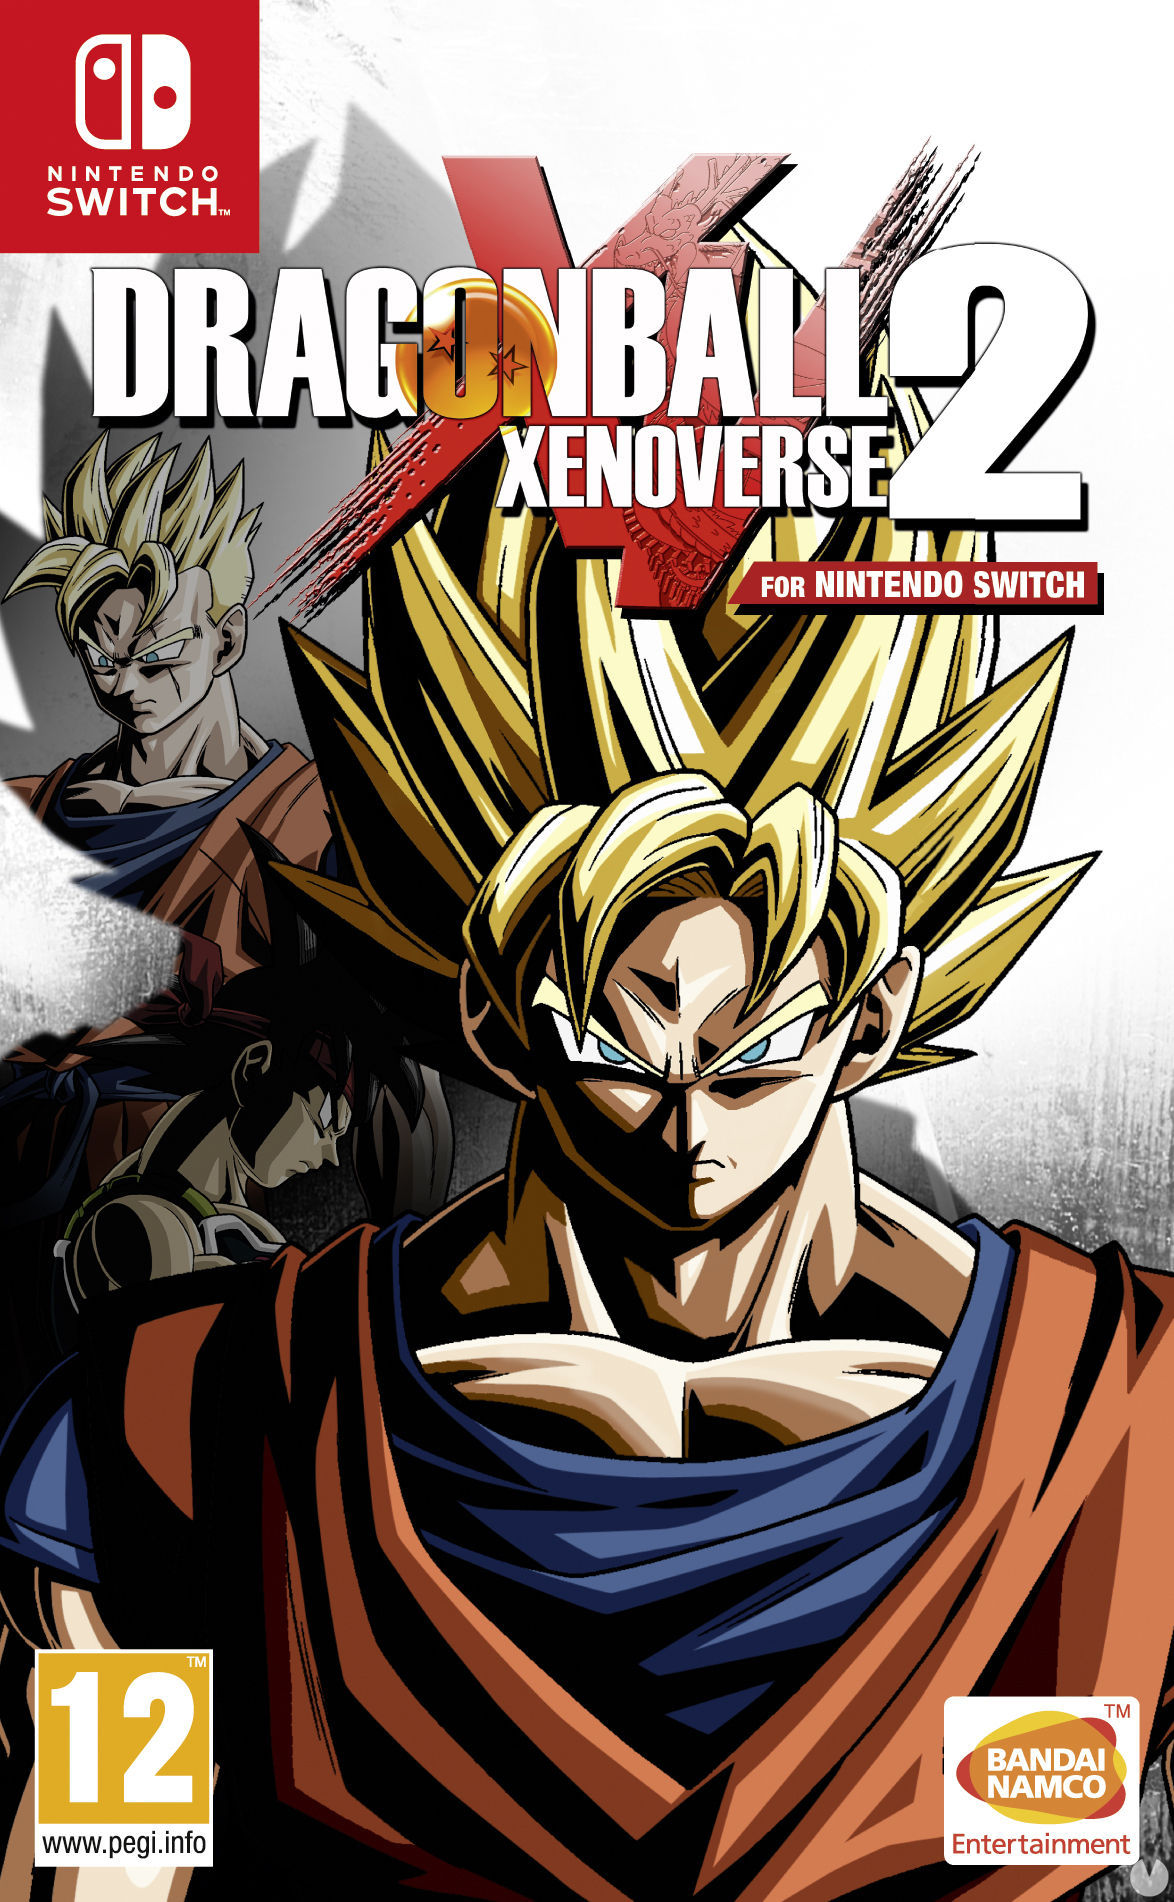 Is Dragon Ball Xenoverse 2 Free On Nintendo Switch